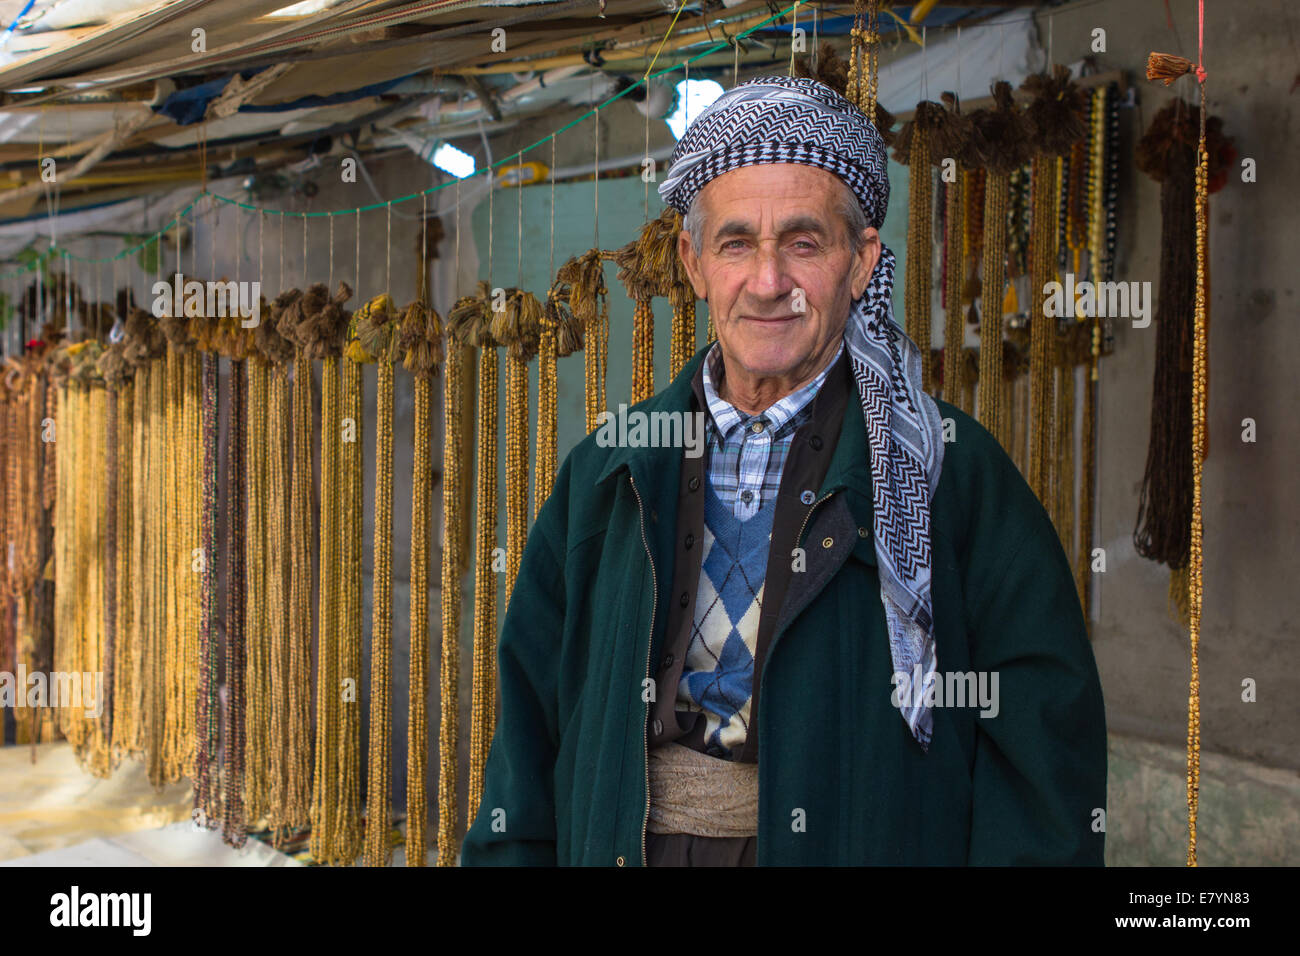 A Kurdish shopkeeper wearing traditional clothing selling prayer chains in Erbil (Arbil), Iraqi Kurdistan province, Iraq. Stock Photo